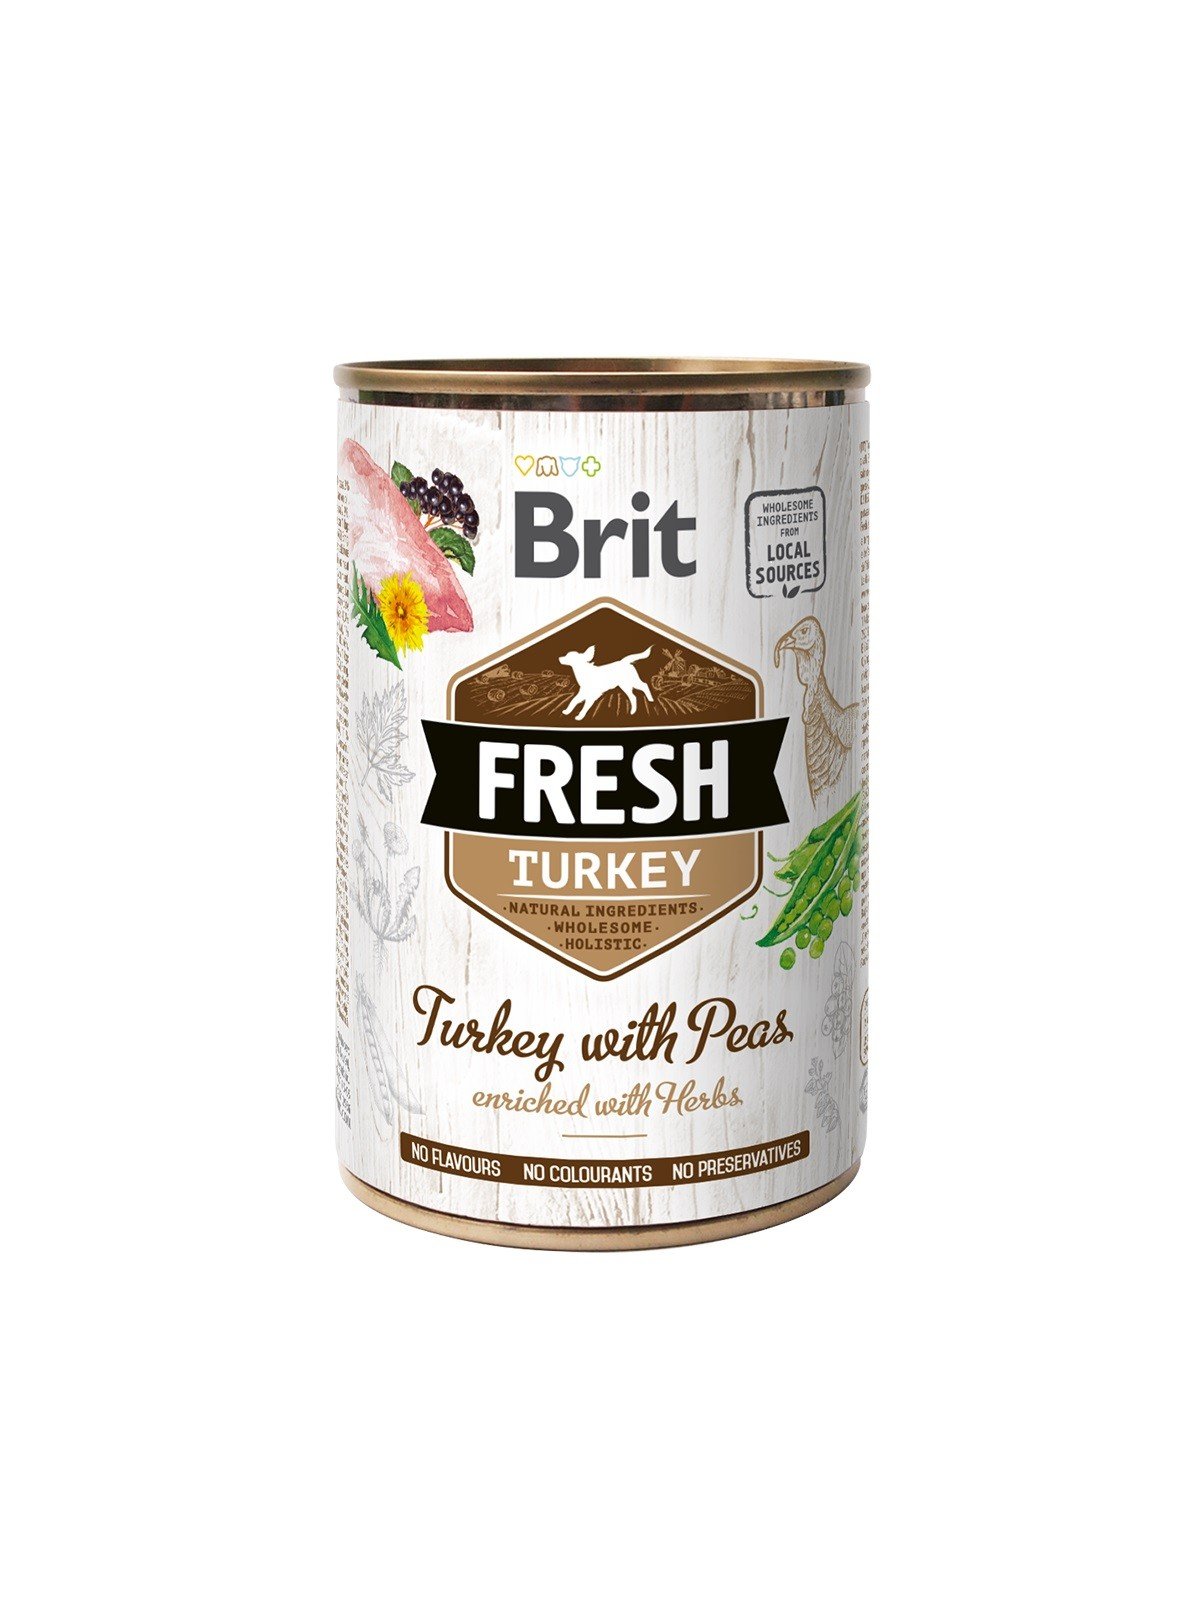 Patè Brit Fresh al tacchino e piselli per cani